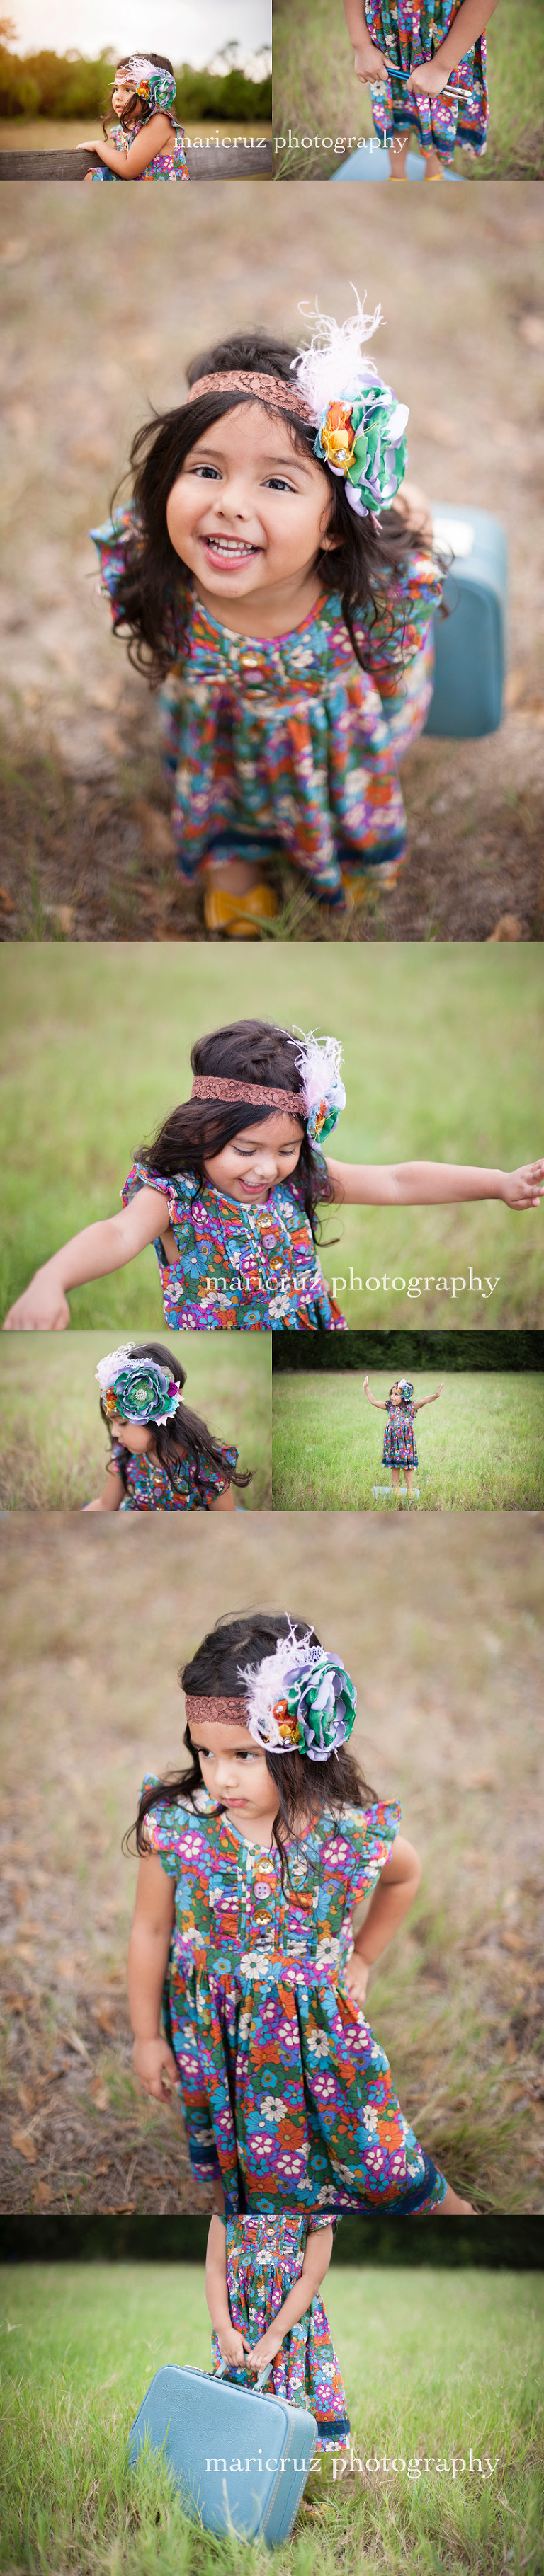 Maricruz Photography | Houston TX Child & Family Photographer 